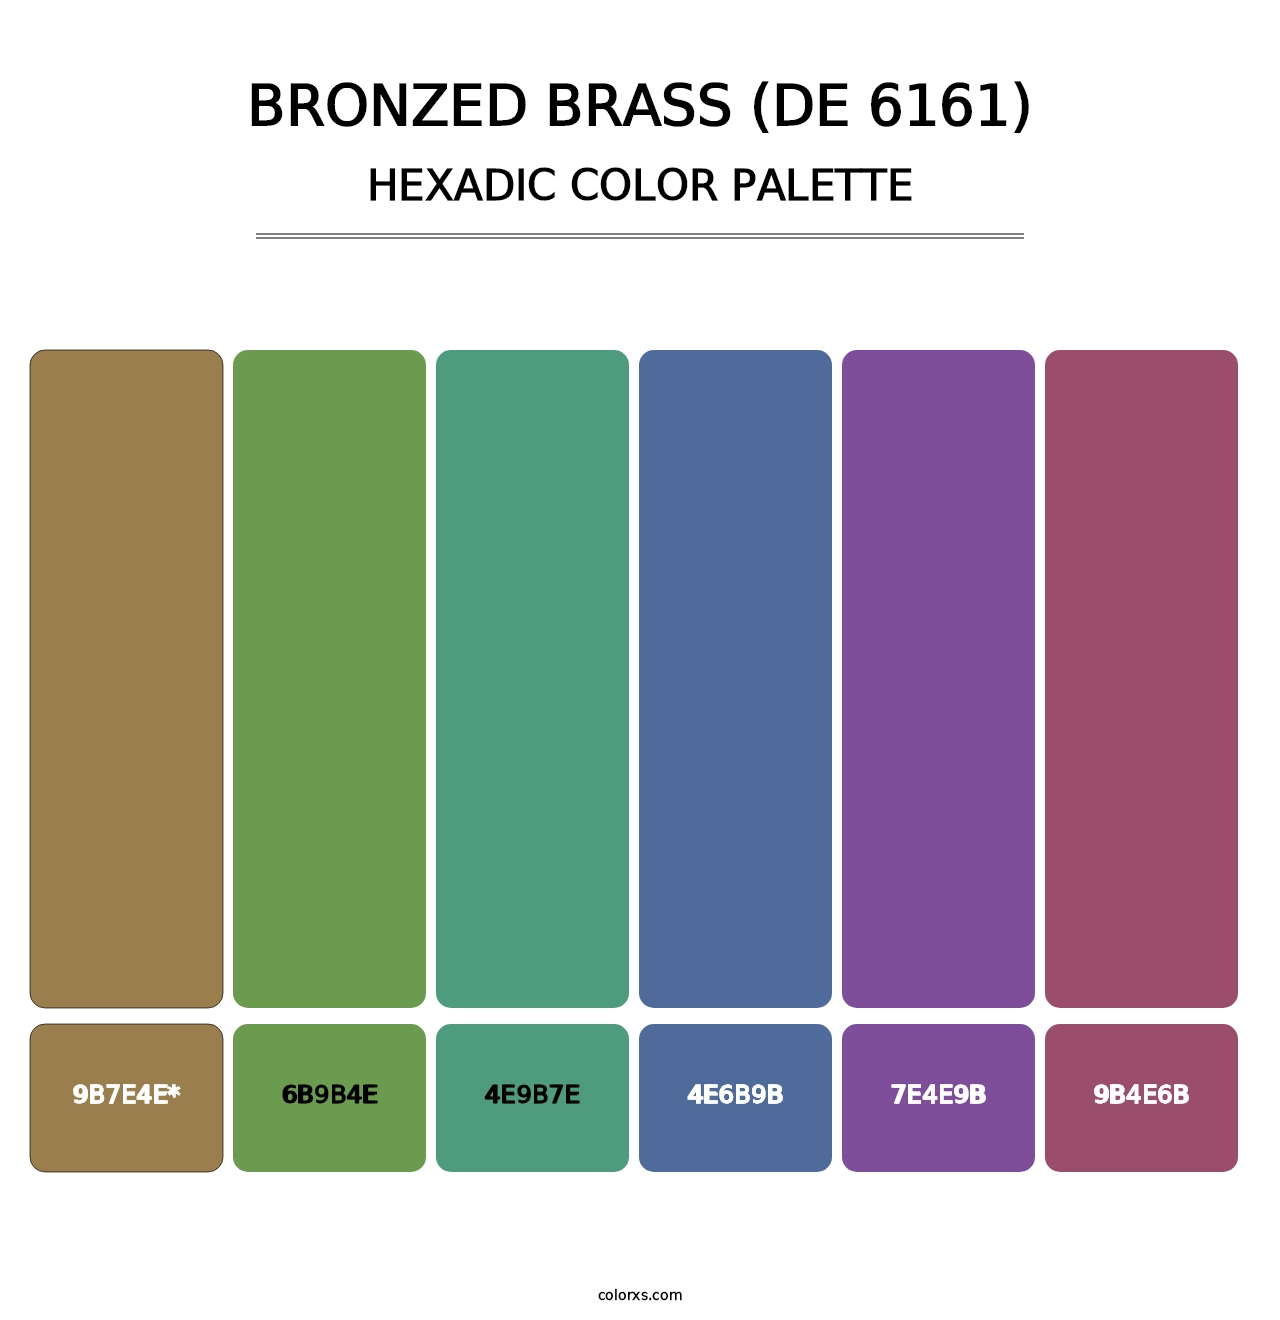 Bronzed Brass (DE 6161) - Hexadic Color Palette